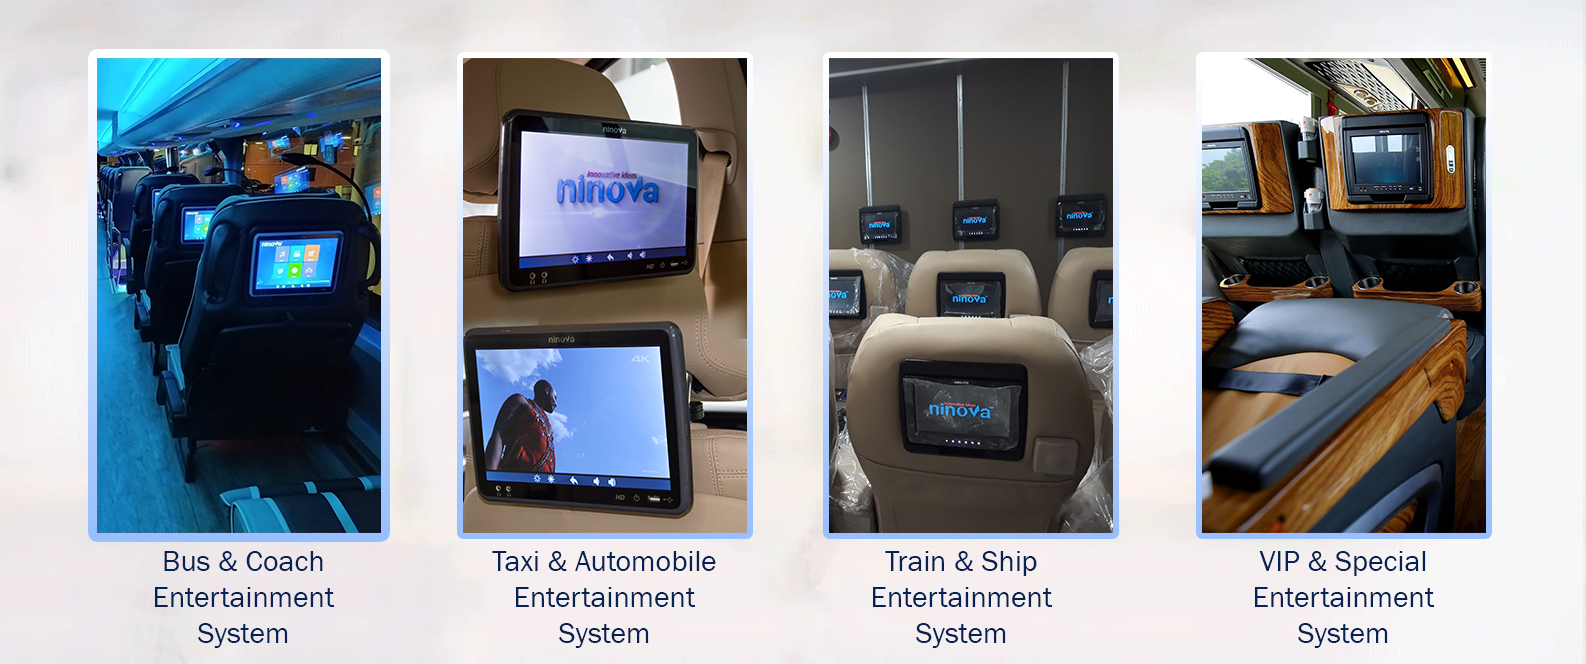 ninova bus and coach entertainment system